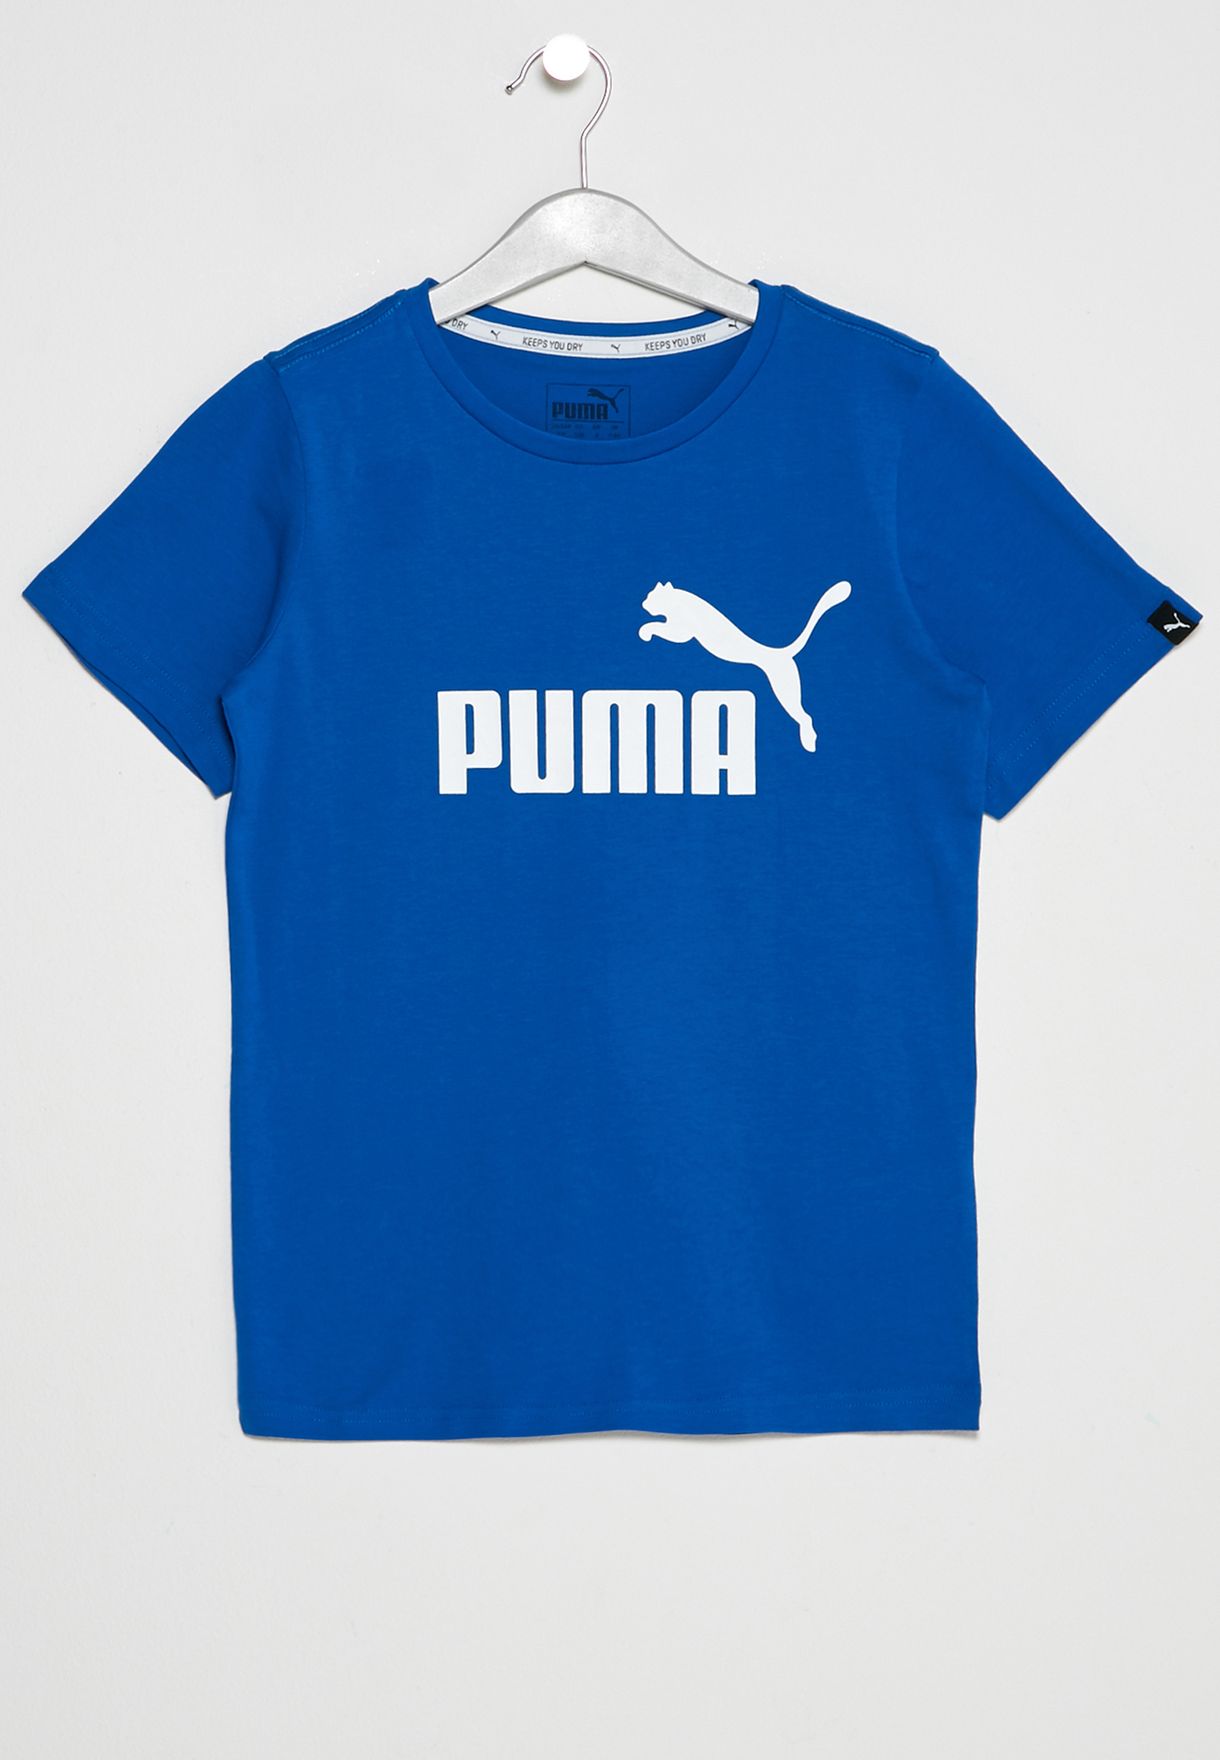 puma blue shirt